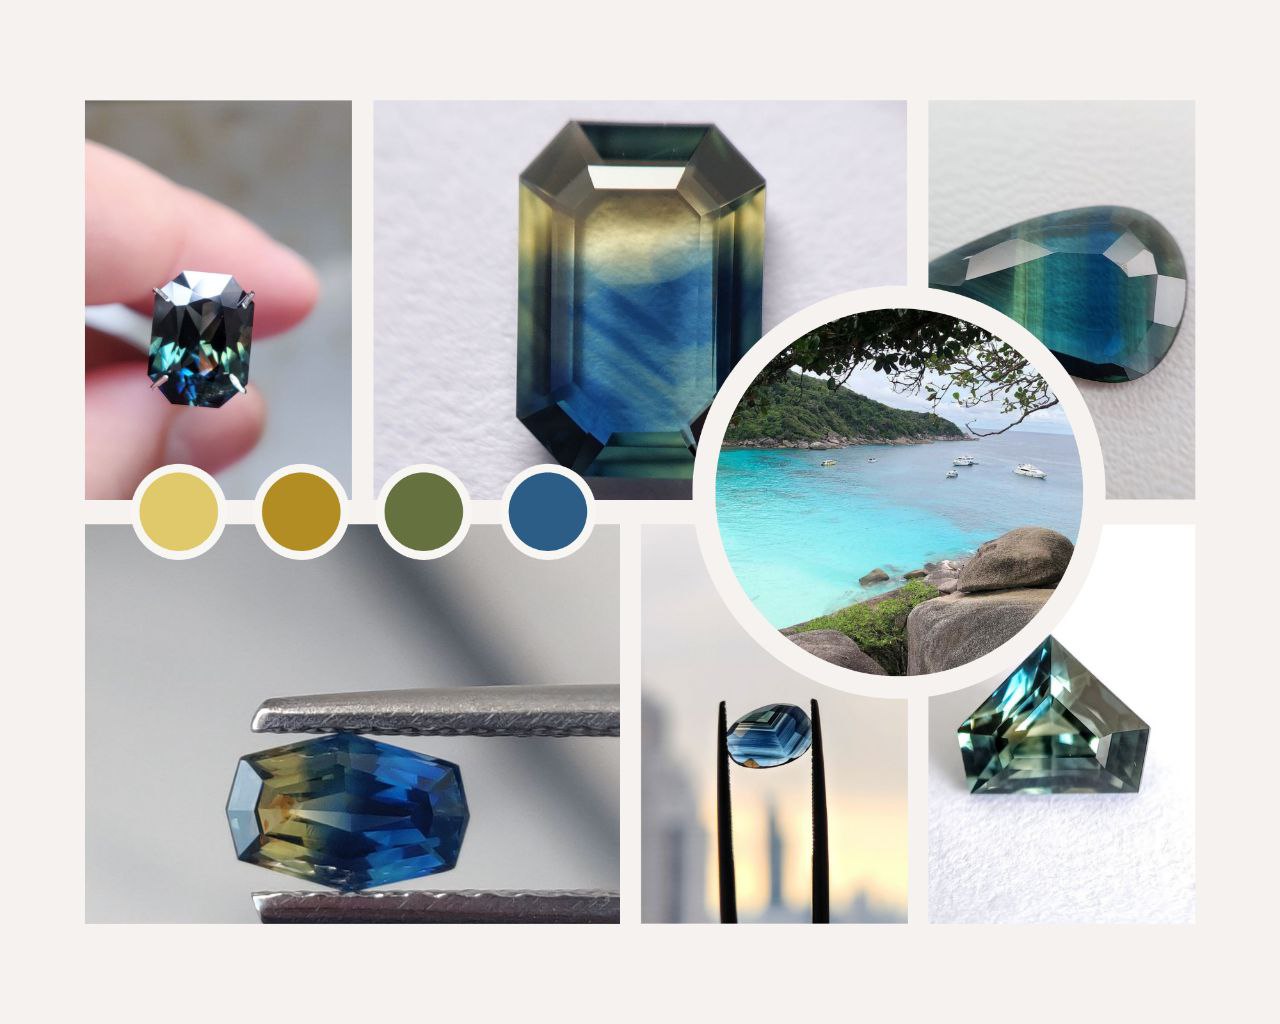 Range of Australian sapphires – Teal, mermaid, parti, bicolored sapphires